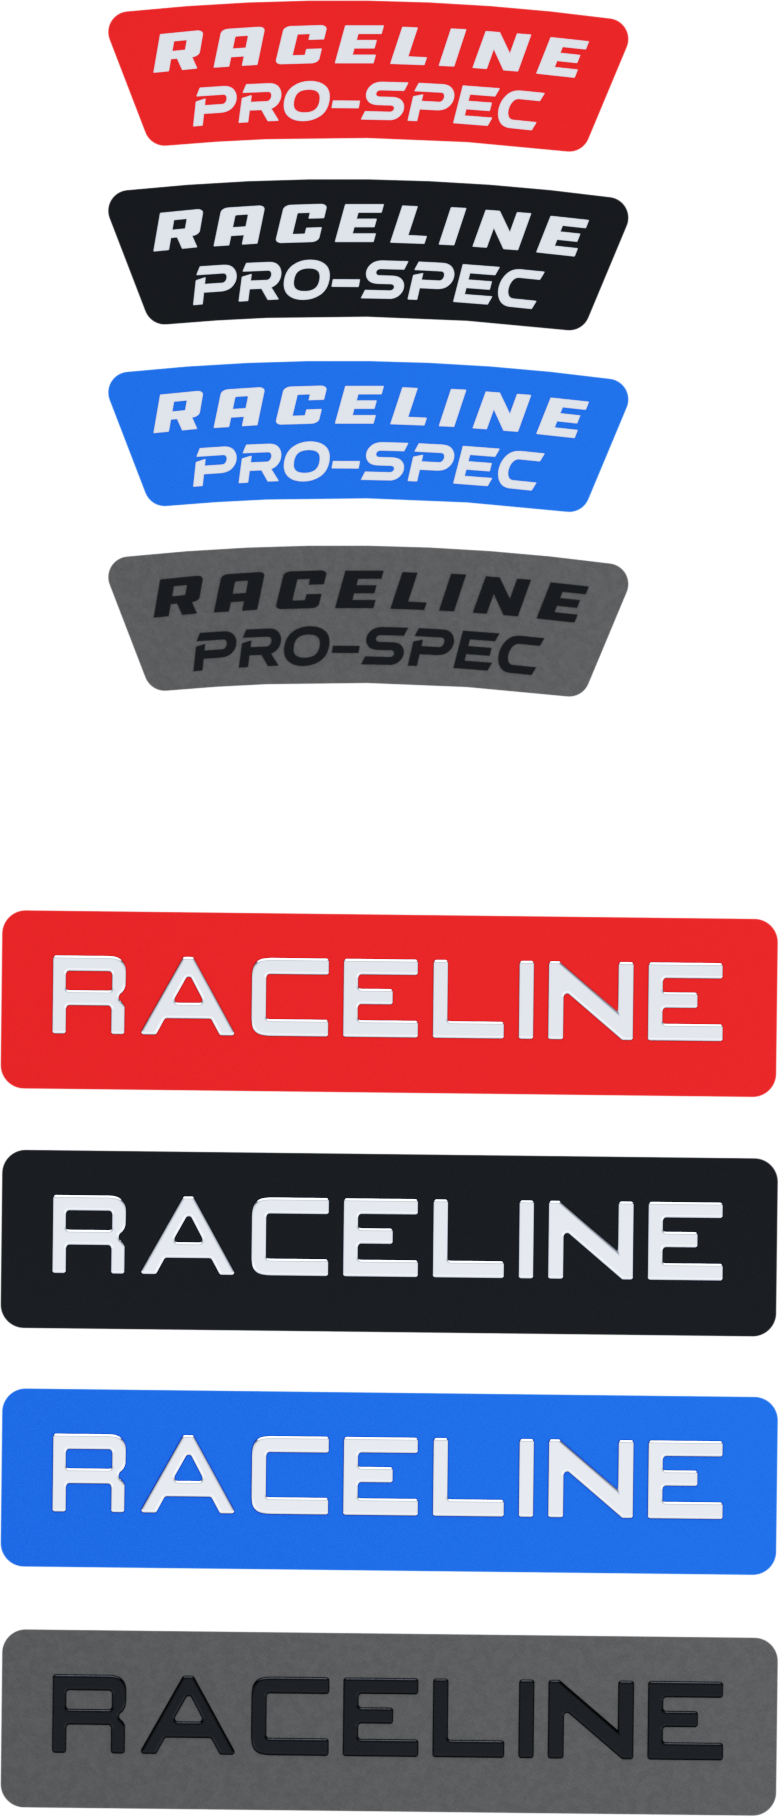 RACELINE Raceline Decal Package Blue/Red/Blk/Gunmetal D-A13-PACK